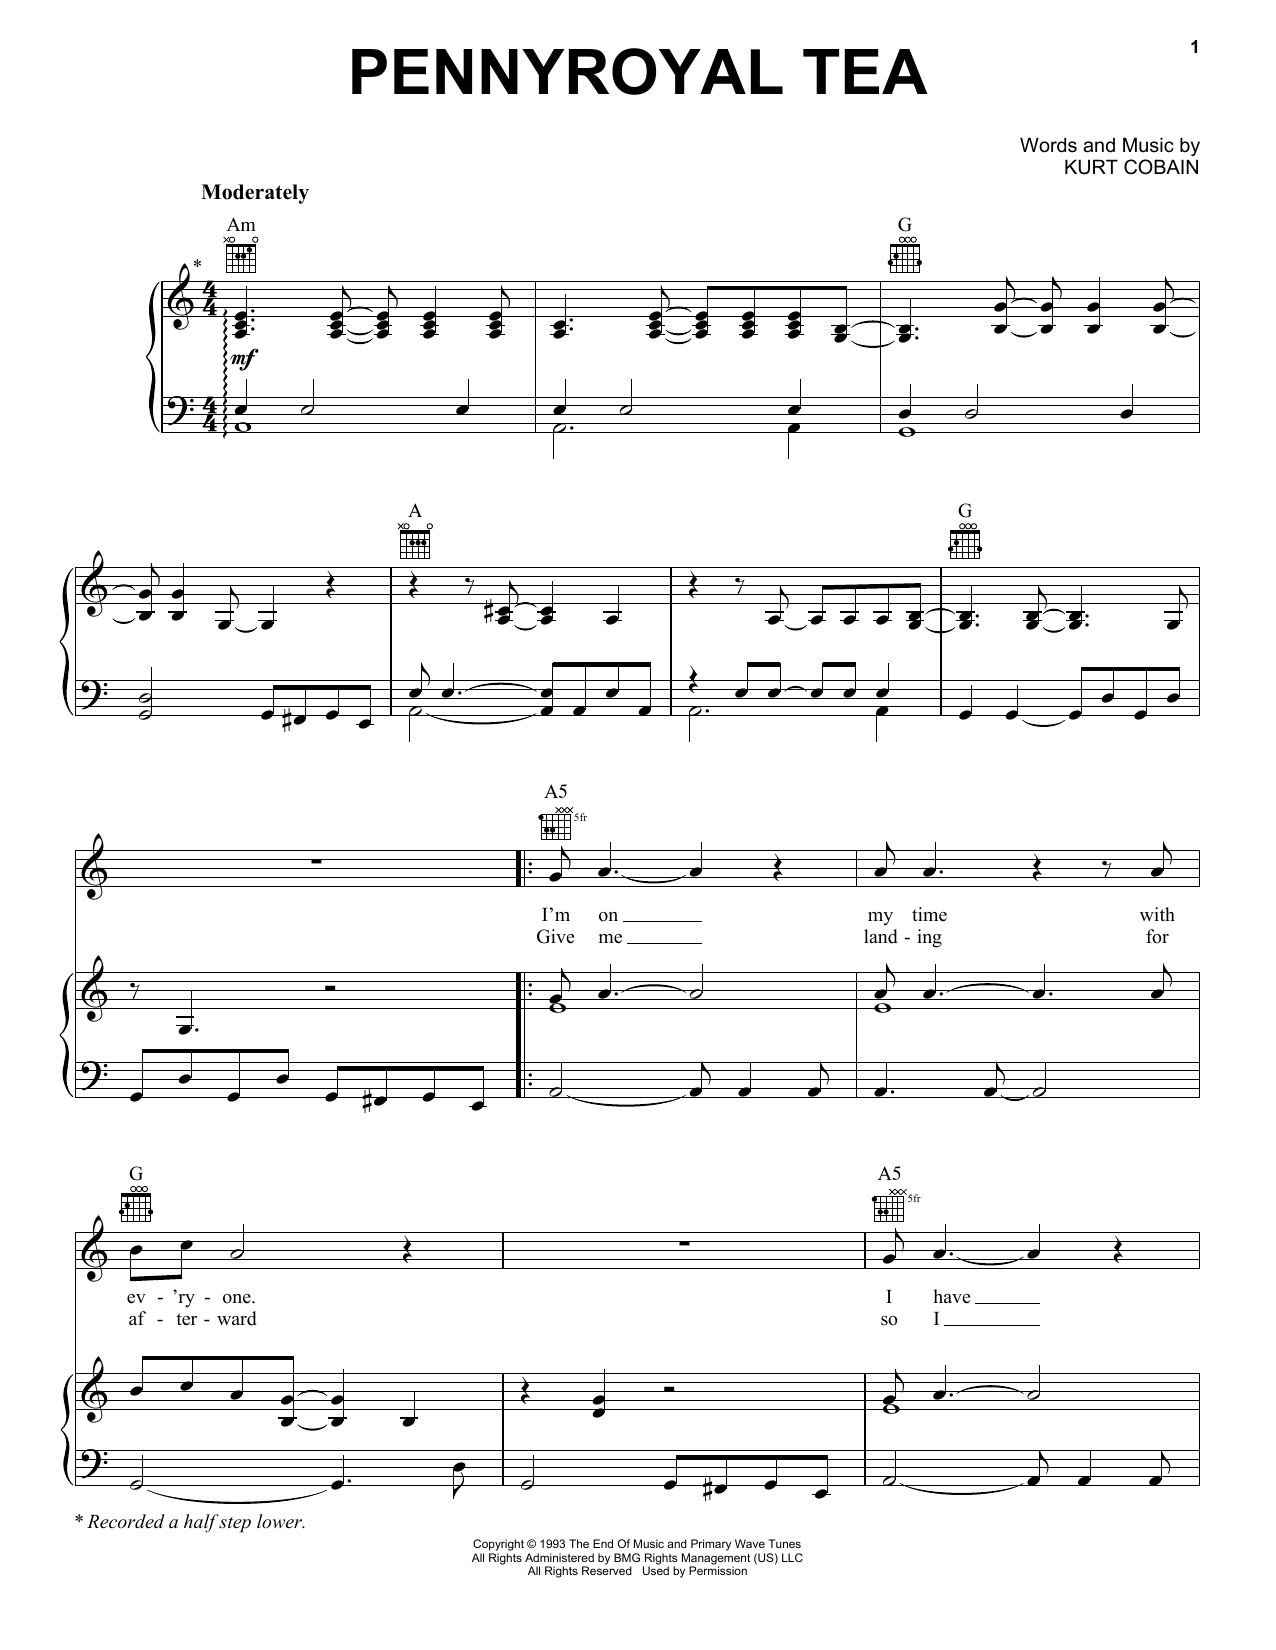 Nirvana Penny Royal Tea Sheet Music Notes & Chords for Guitar Tab - Download or Print PDF